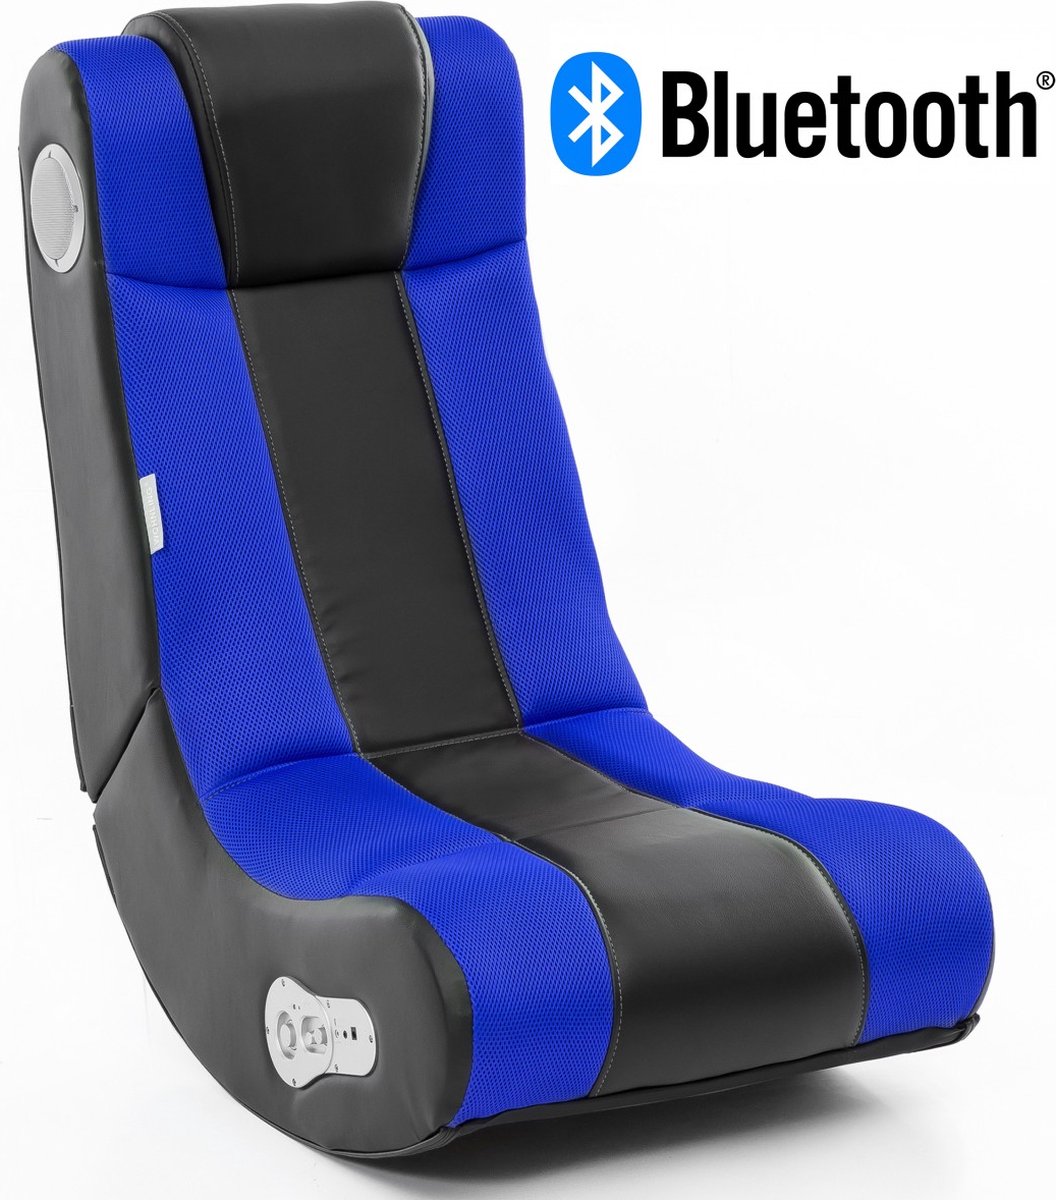 24Designs Max - Racestoel Gamestoel - Bluetooth & Speakers - Zwart / Blauw